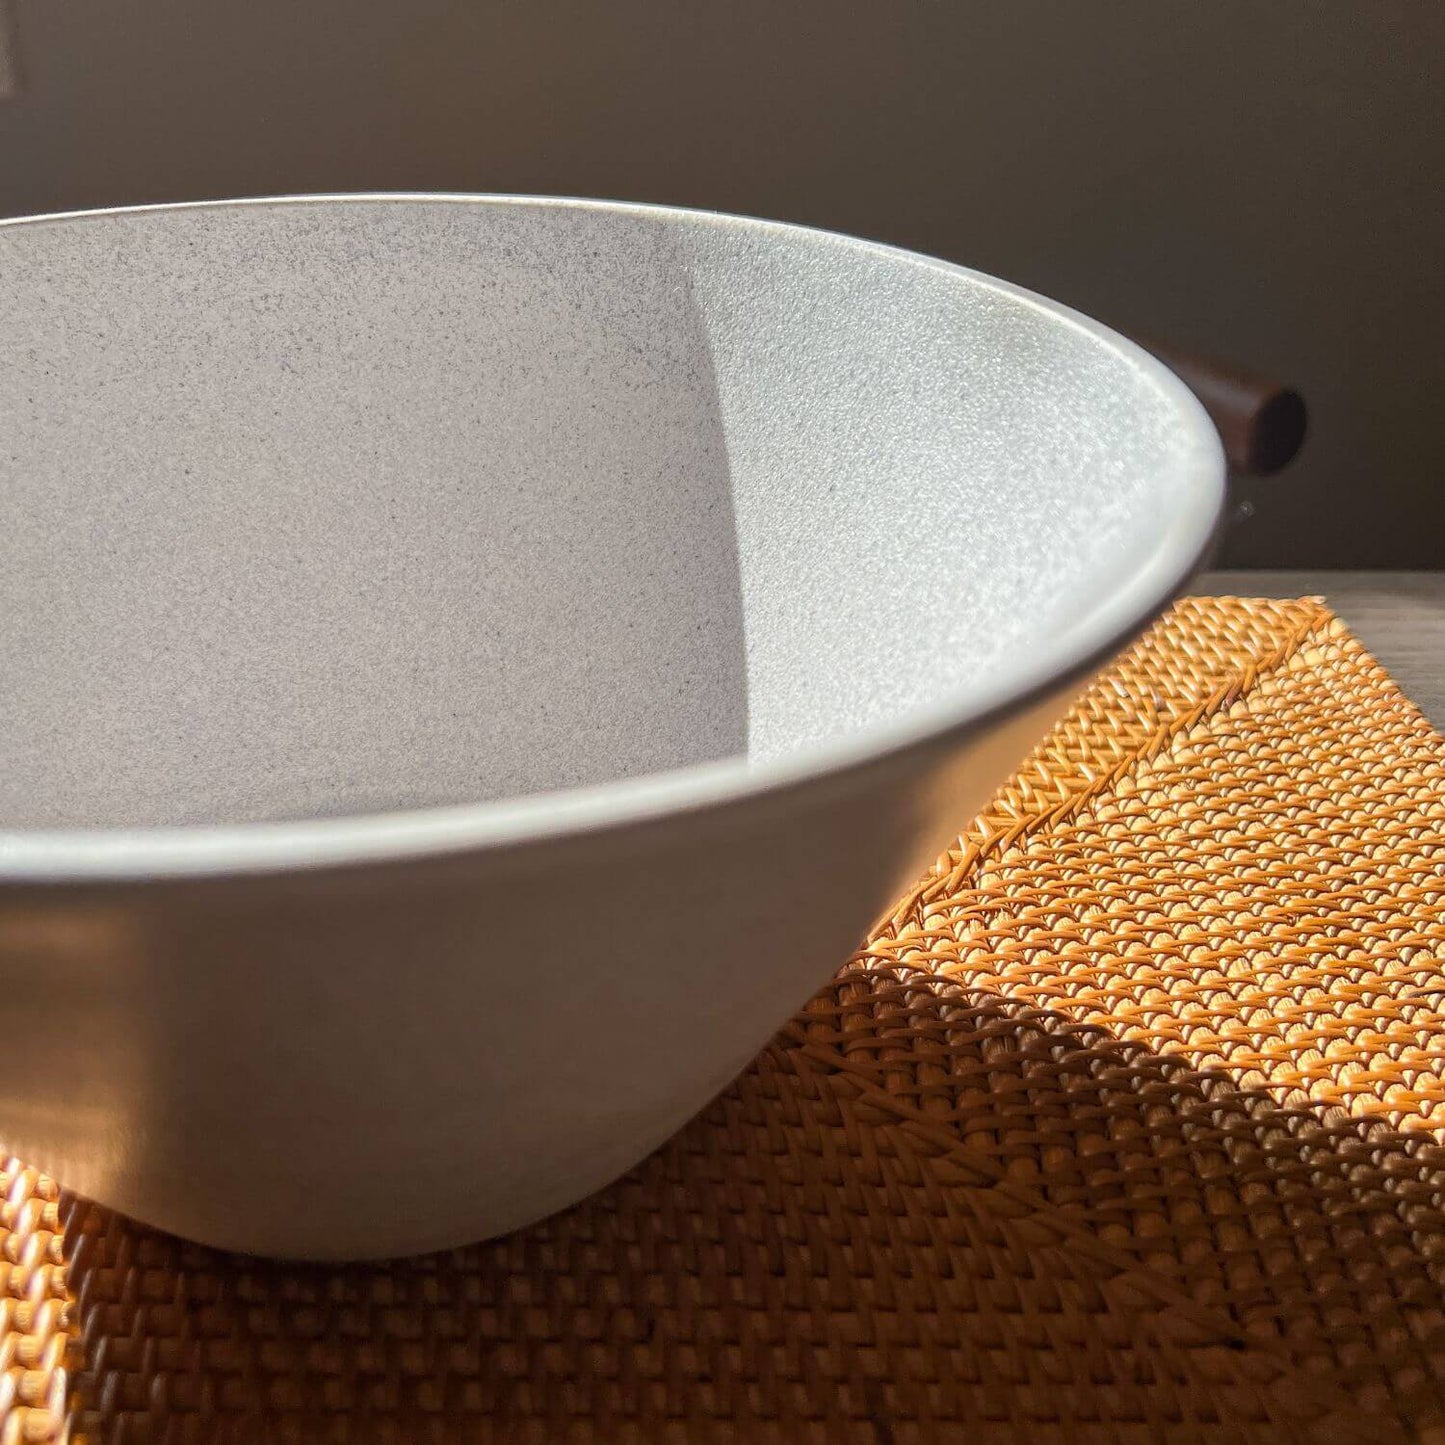 Ramen Bowl by Akai Ceramic